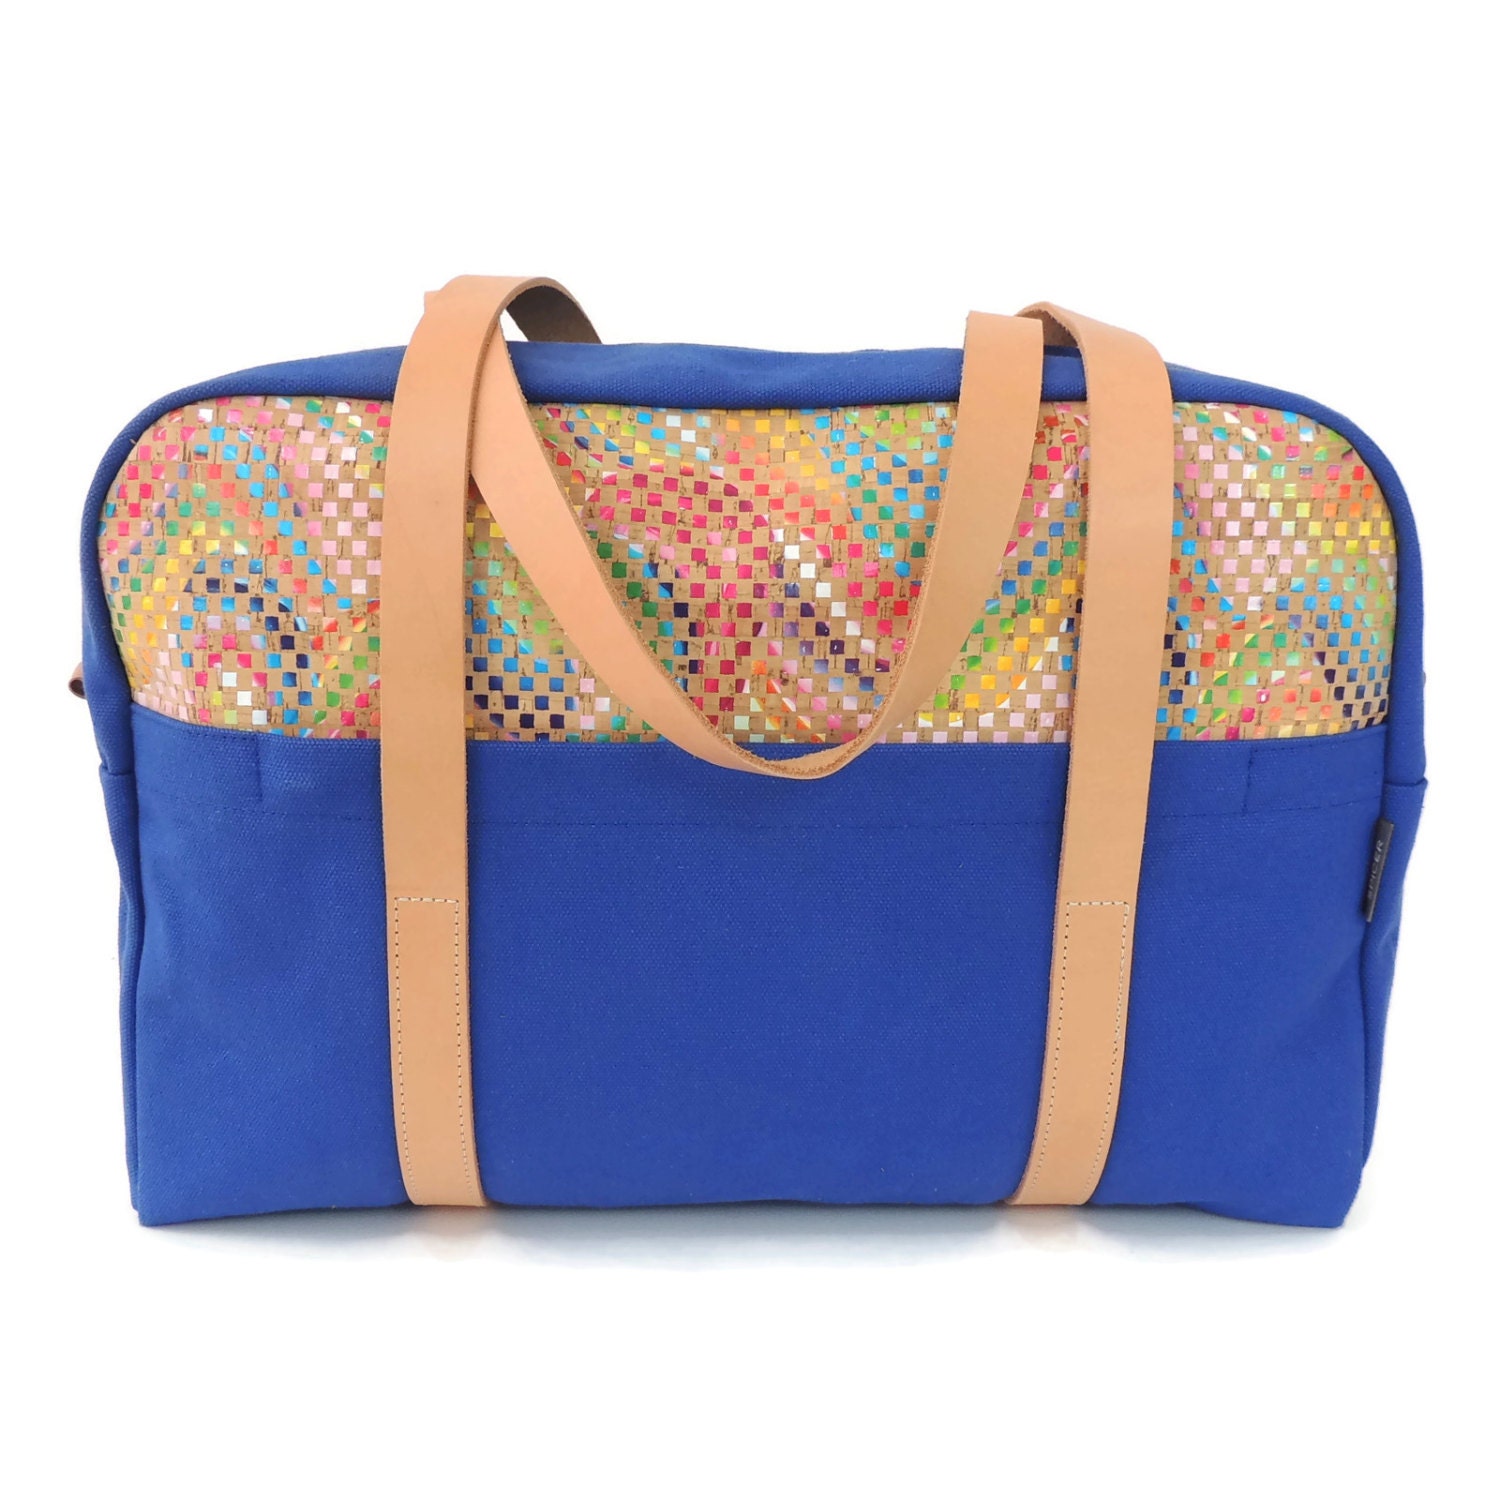 Small Weekender Bag Blue Canvas Duffle Bag Veg Tan by SpicerBags